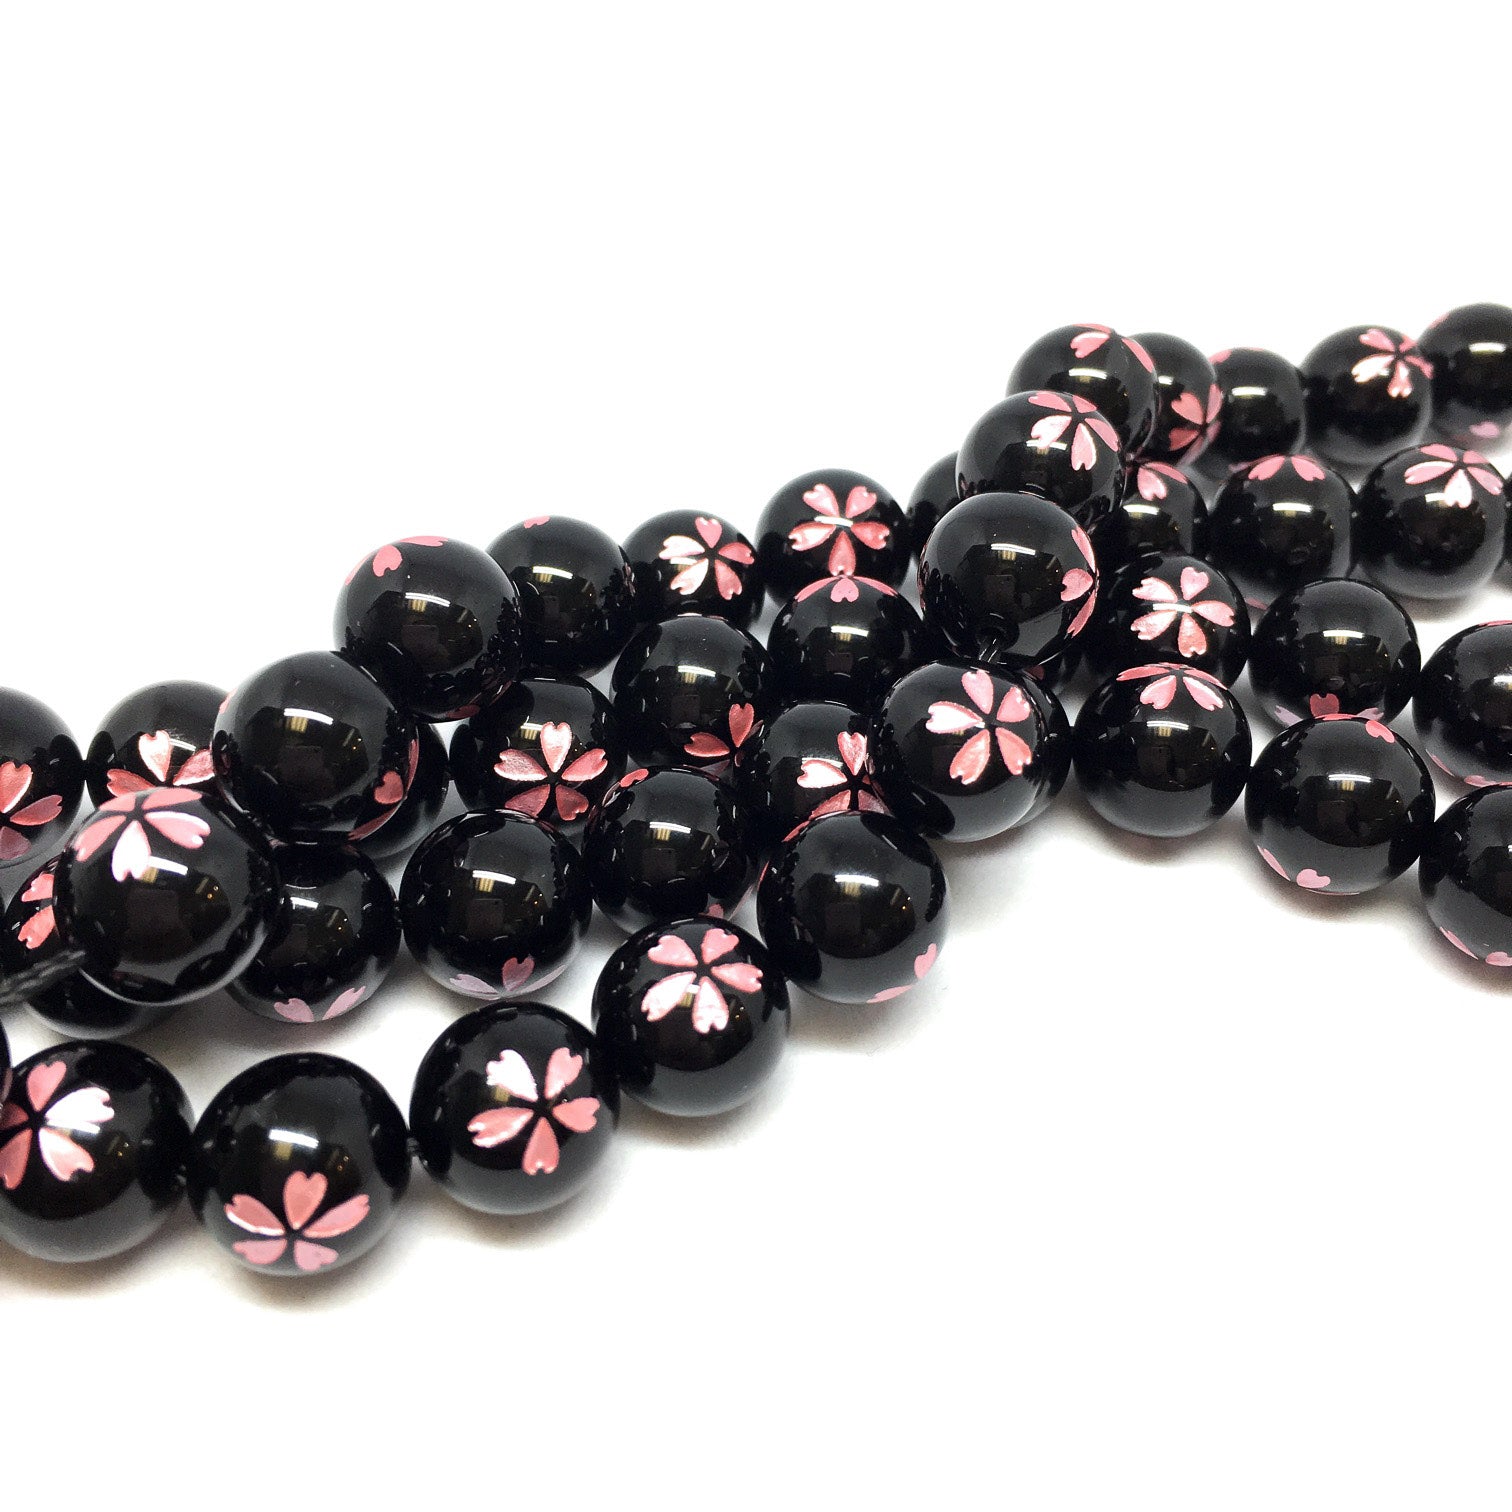 Black Cherry Blossom Agate Beads Sakura Smooth Round, approx 10mm dia  (GB10687-10MM)